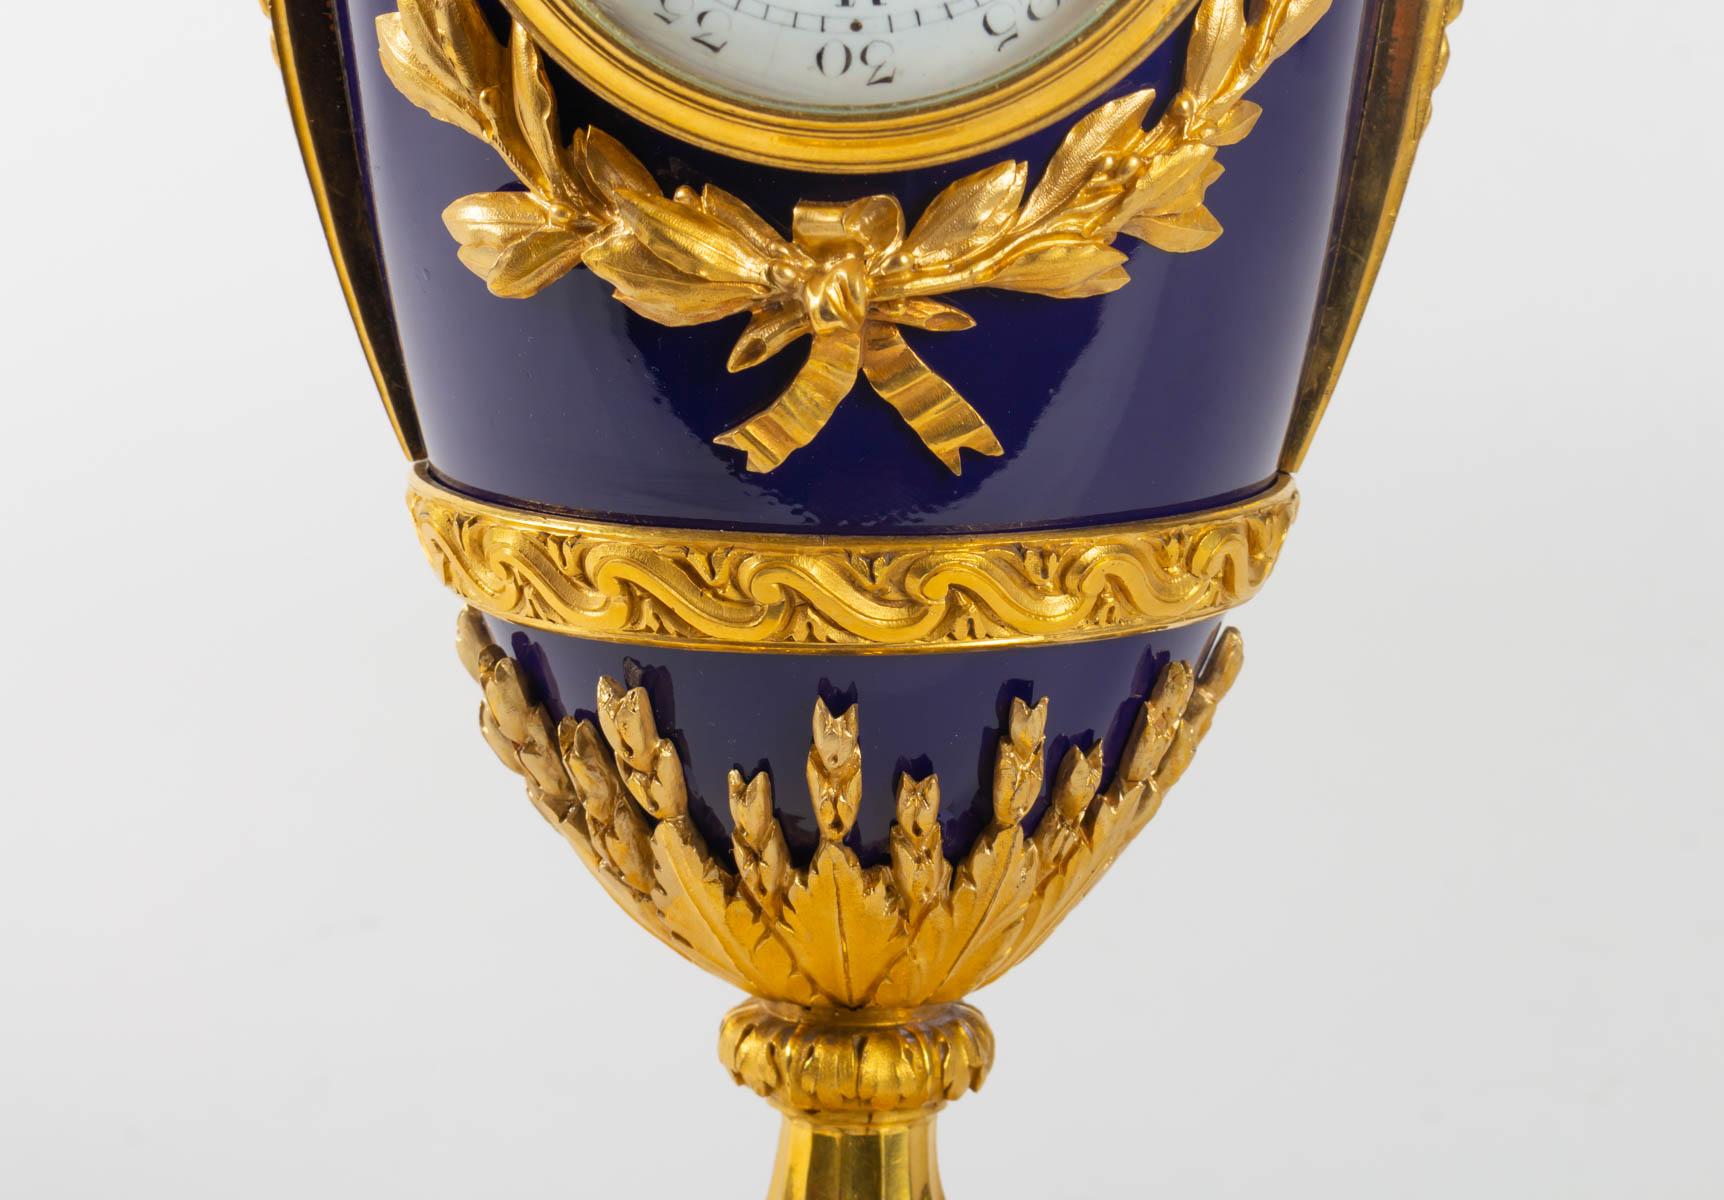 Superb Clock, Giltbronze and Blue Enamel by Beurdeley, Paris, France, circa 1850 For Sale 2